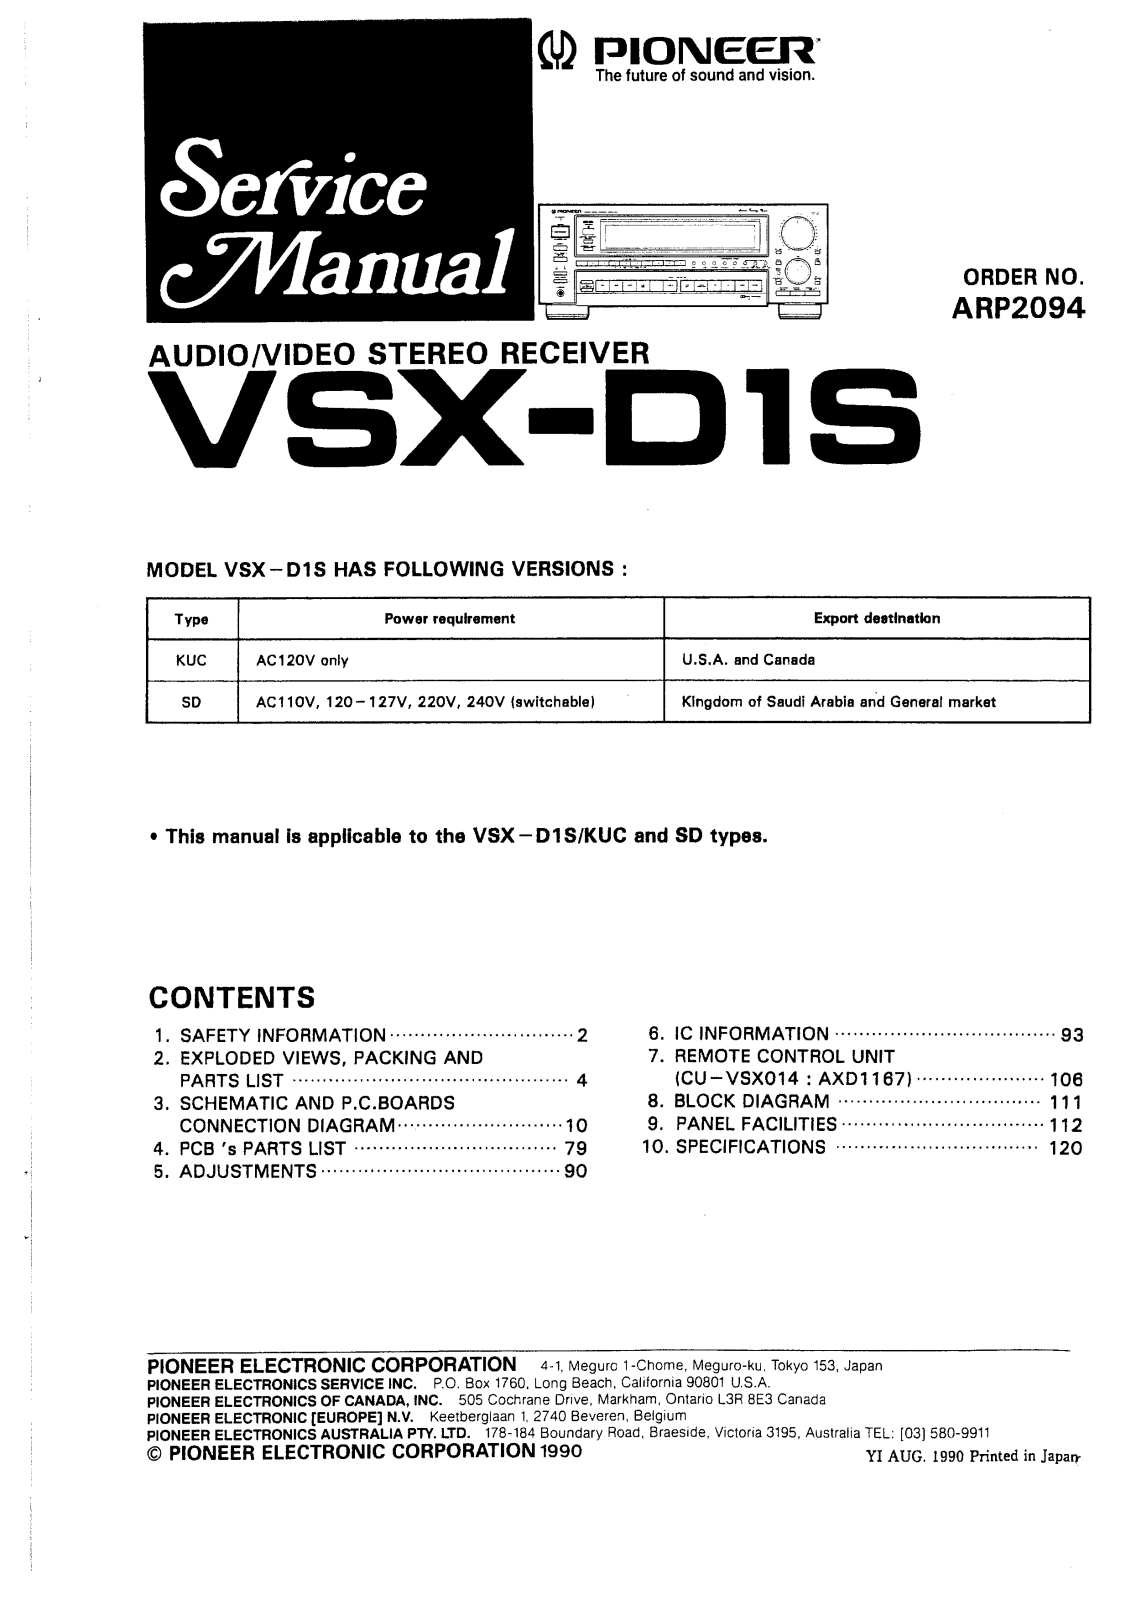 Pioneer VSX-D1S Manual